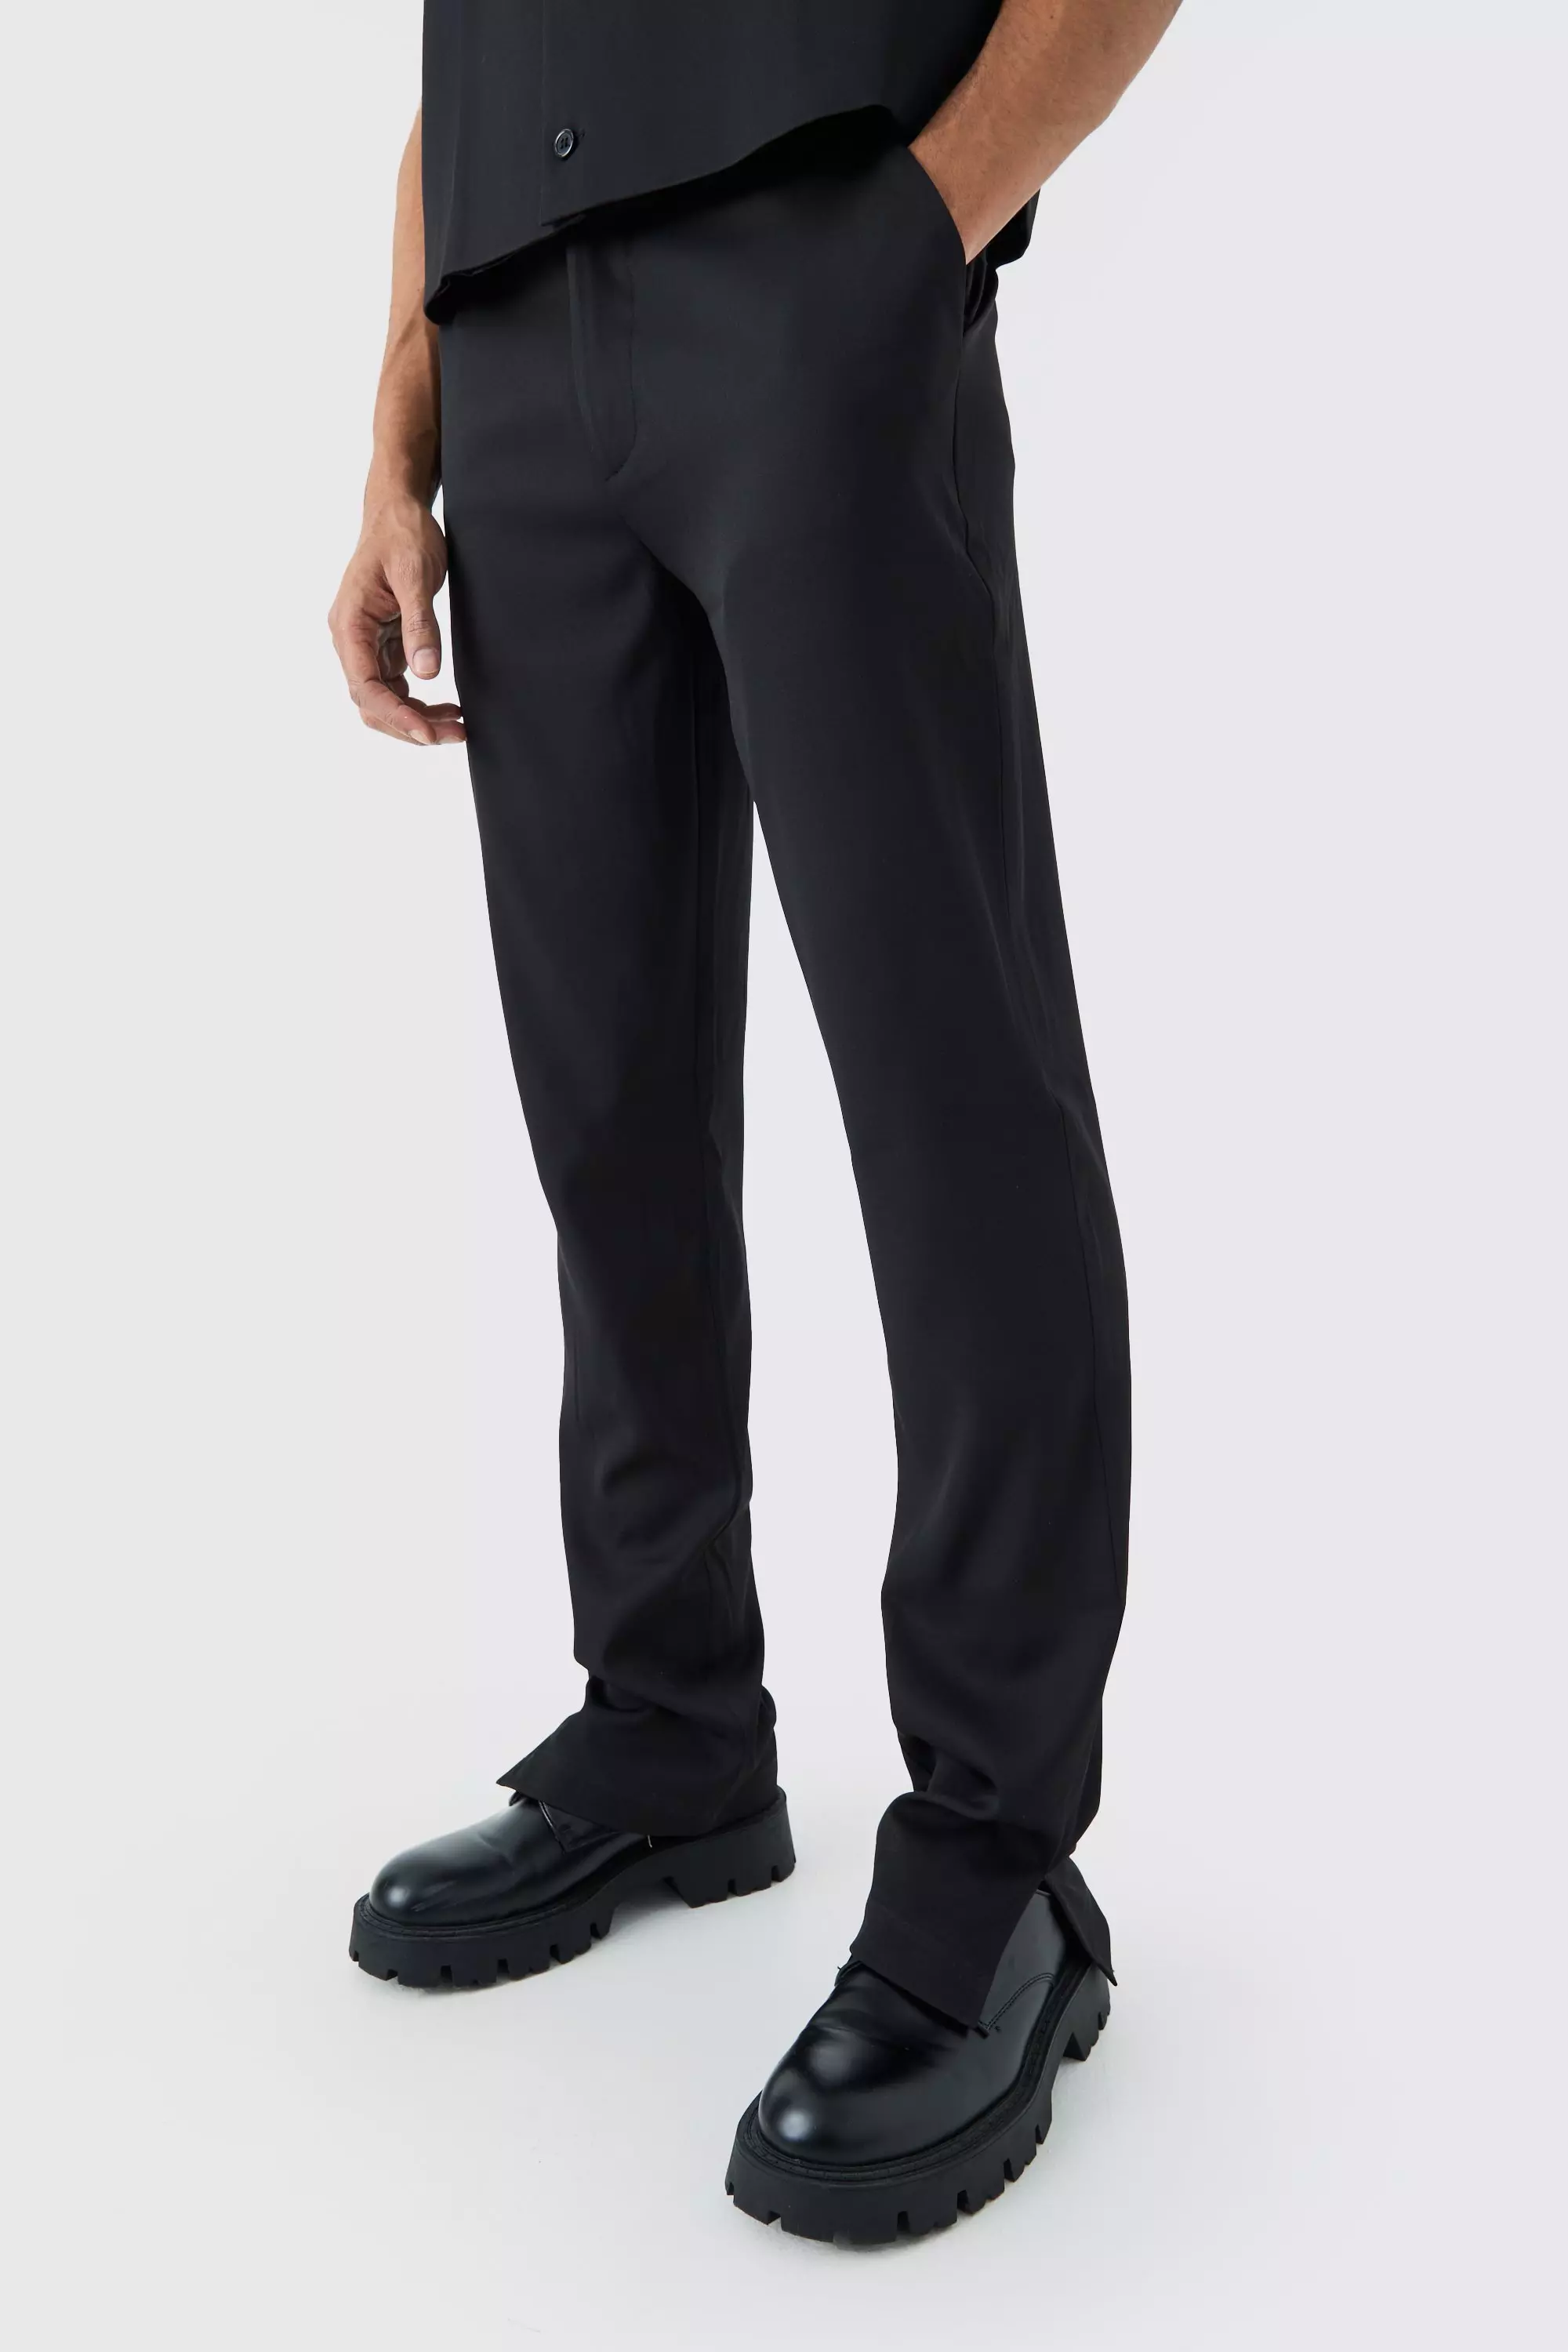 Mix & Match Tailored Split Hem Trousers Black